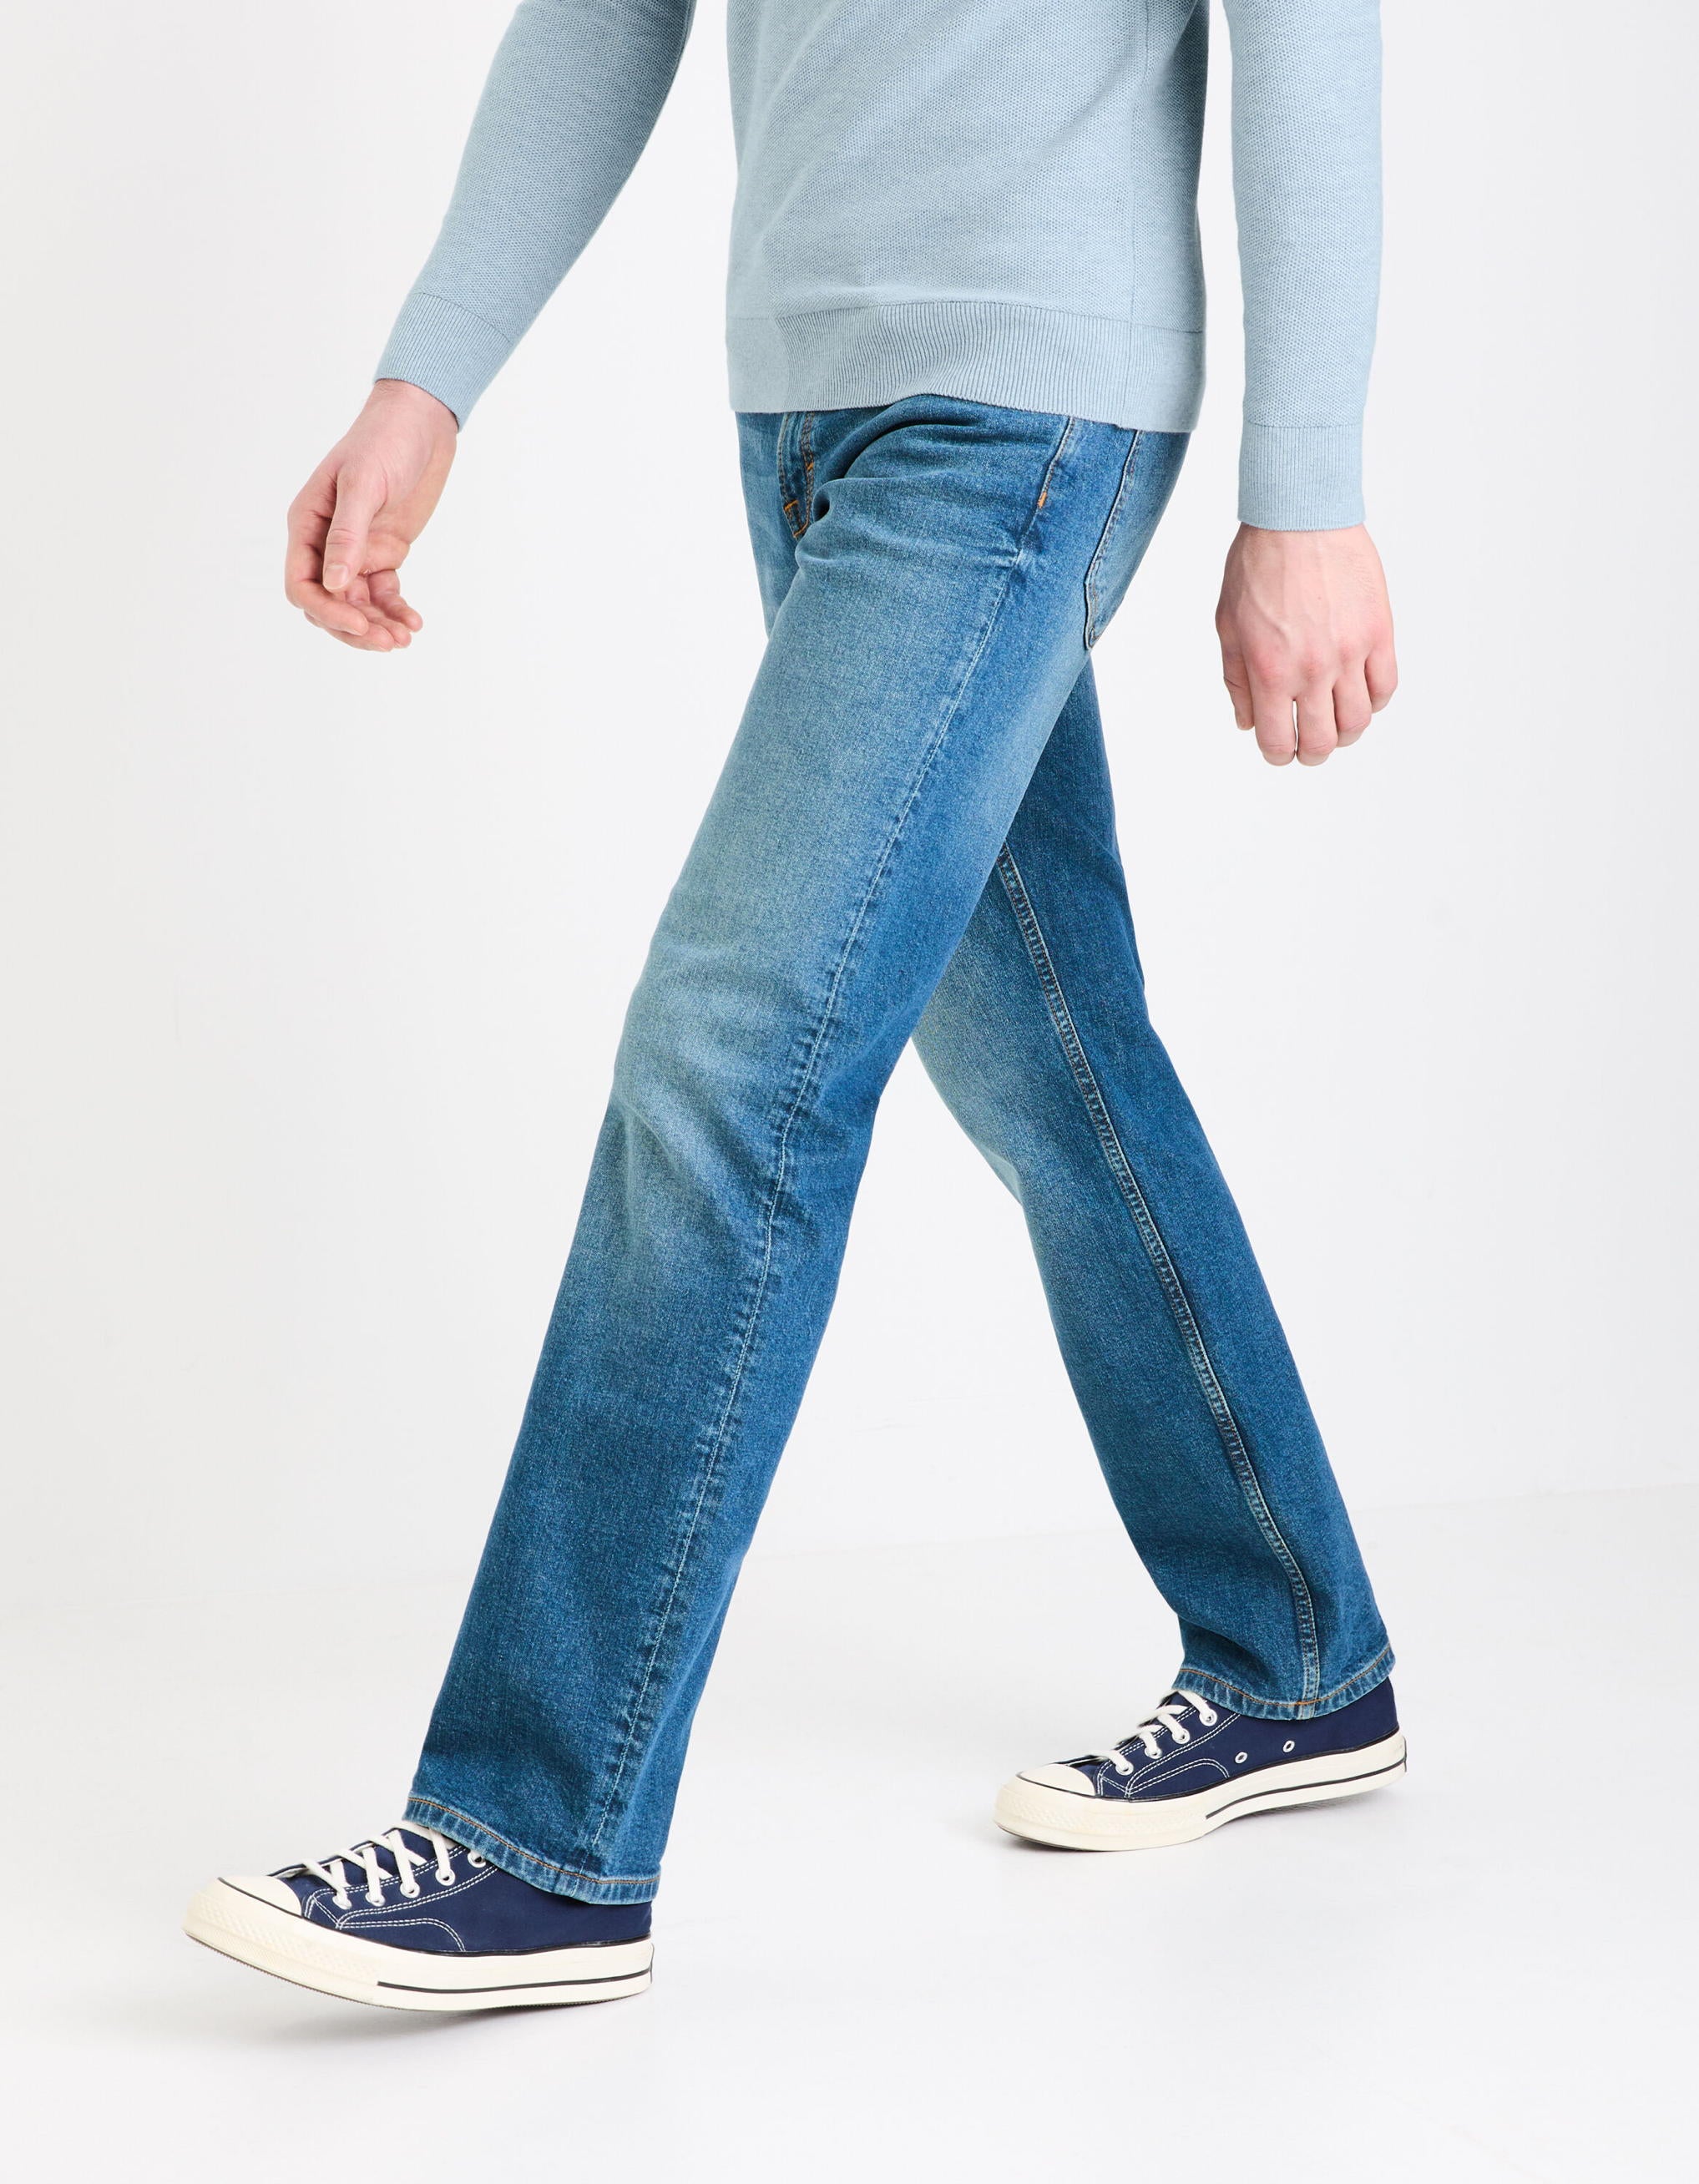 Regular C5 Stretch Jeans 3 Lengths_REGULAR3L_DOUBLE STONE_05